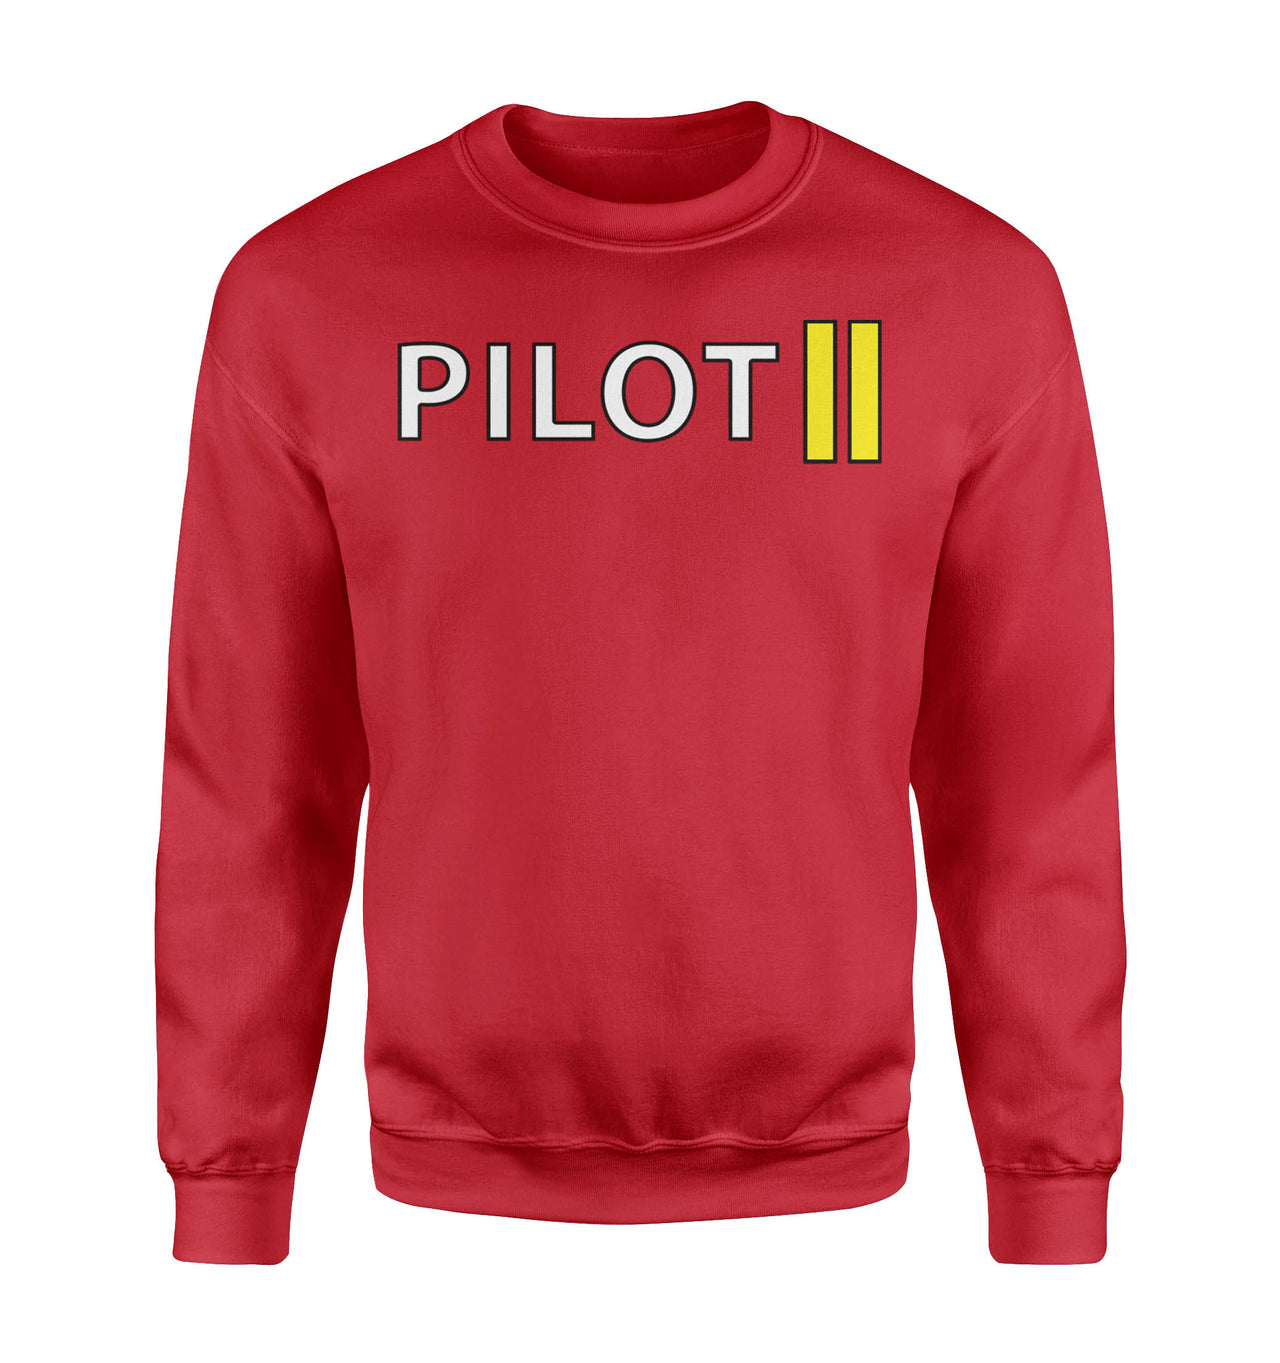 Pilot & Stripes (2 Lines) Designed Sweatshirts